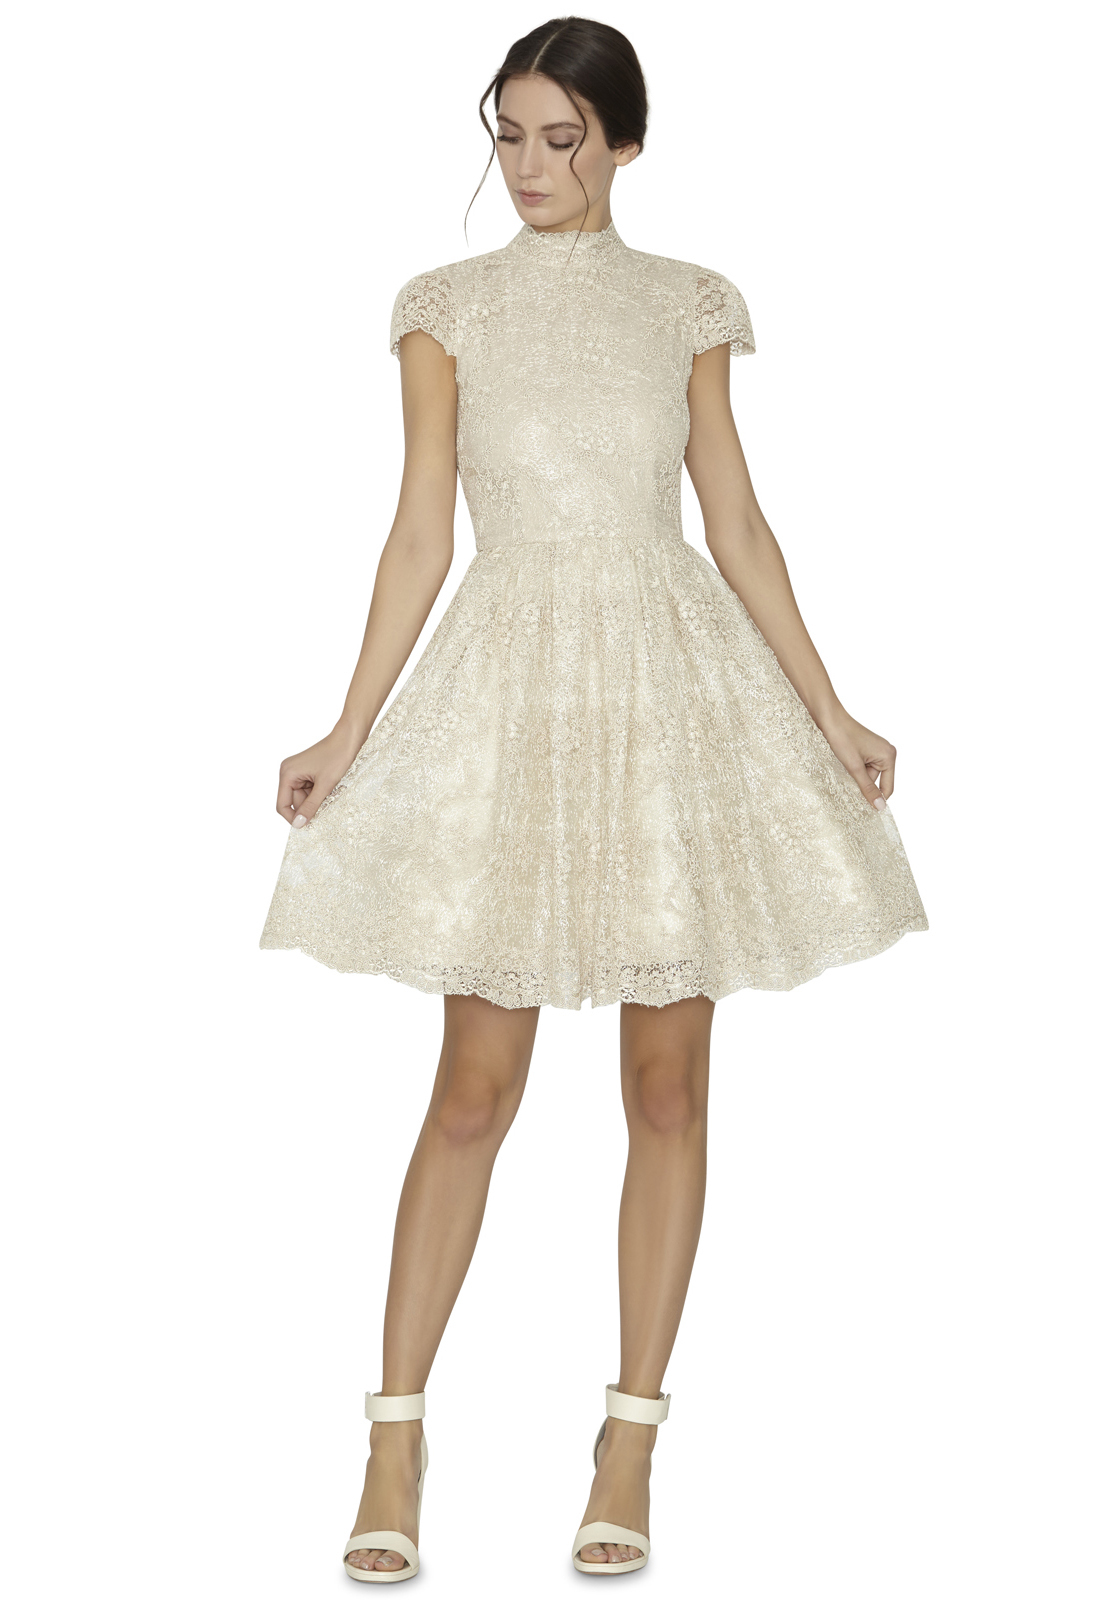 Alice + olivia Natalina Full Skirt High Neck Dress in Metallic | Lyst